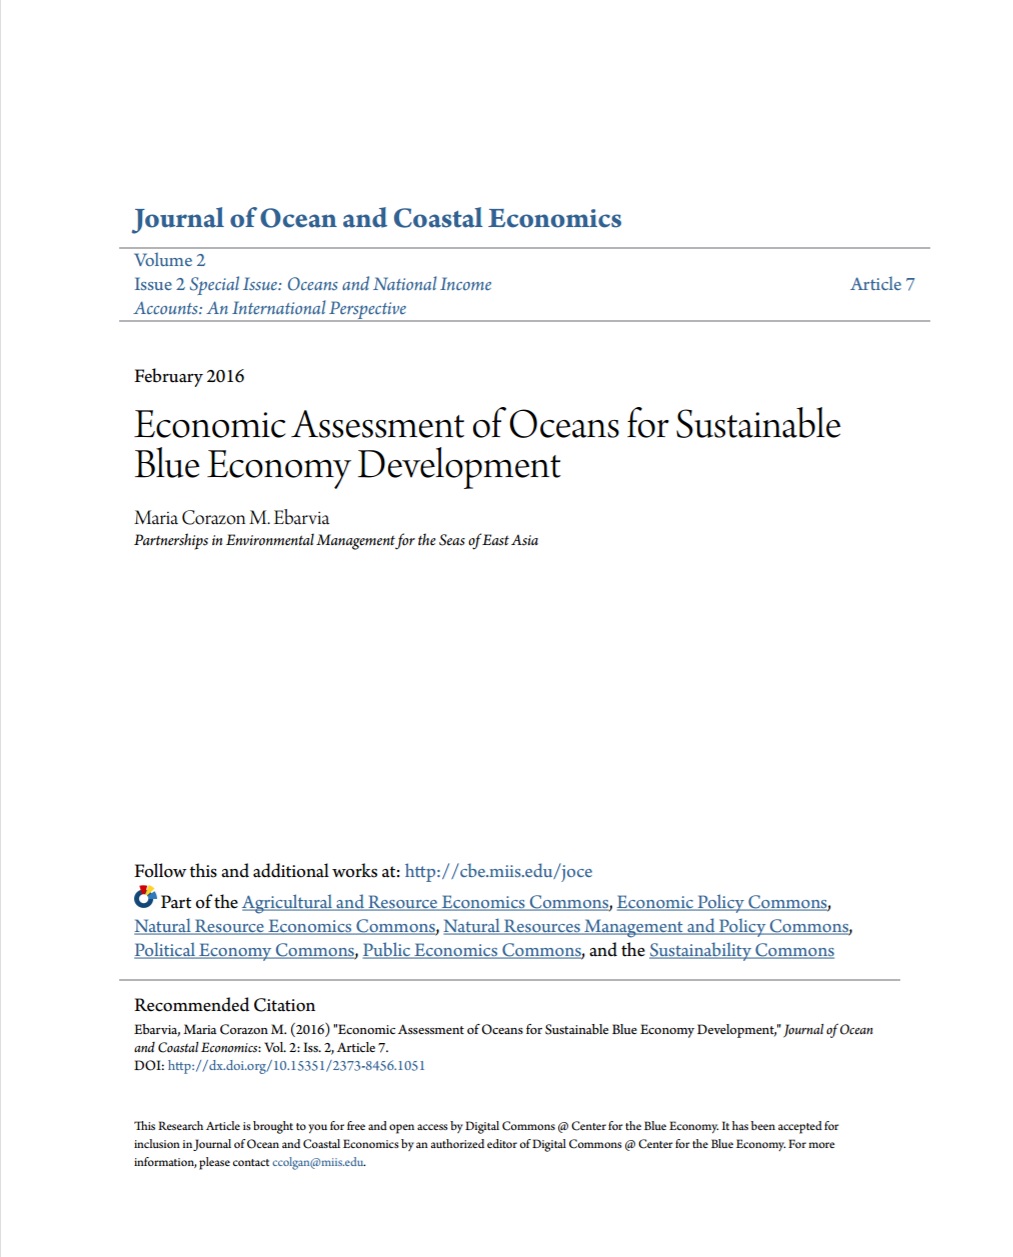 Economic Assessment of Oceans for Sustainable Blue Economy Development